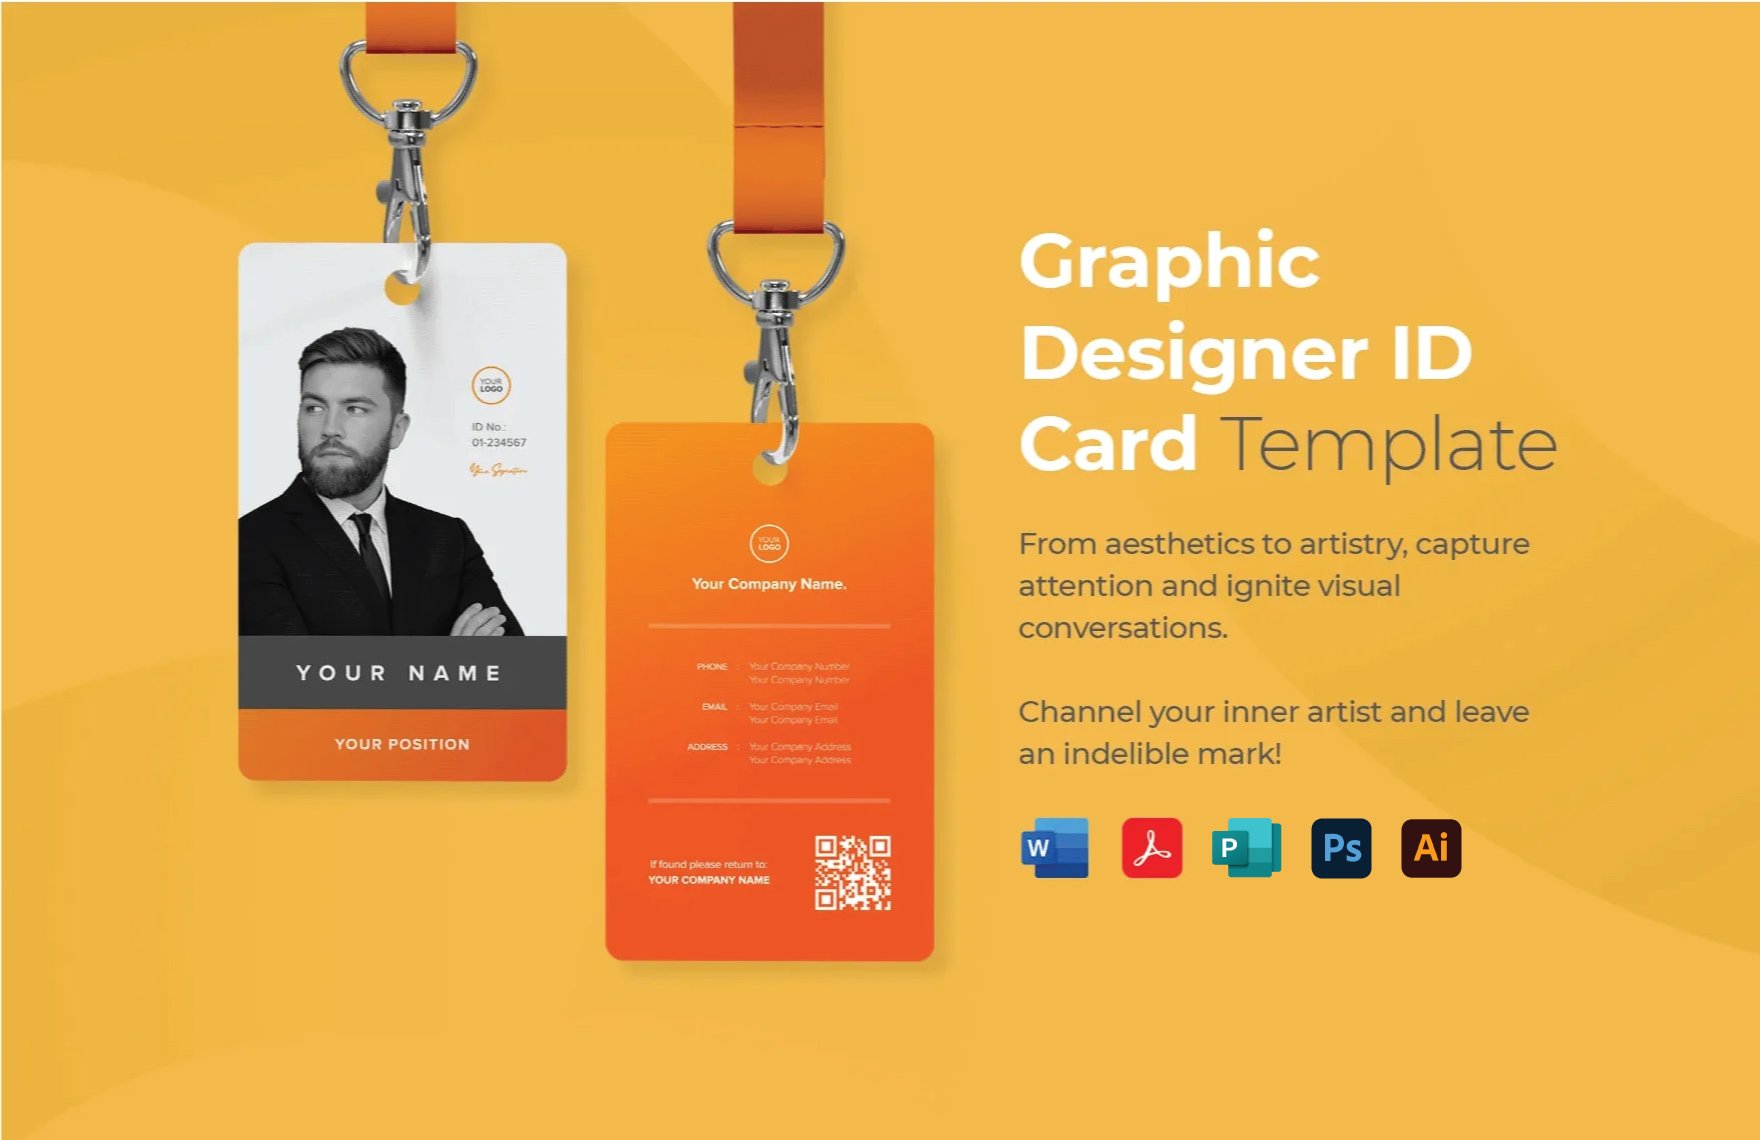 Graphic Designer ID Card Template